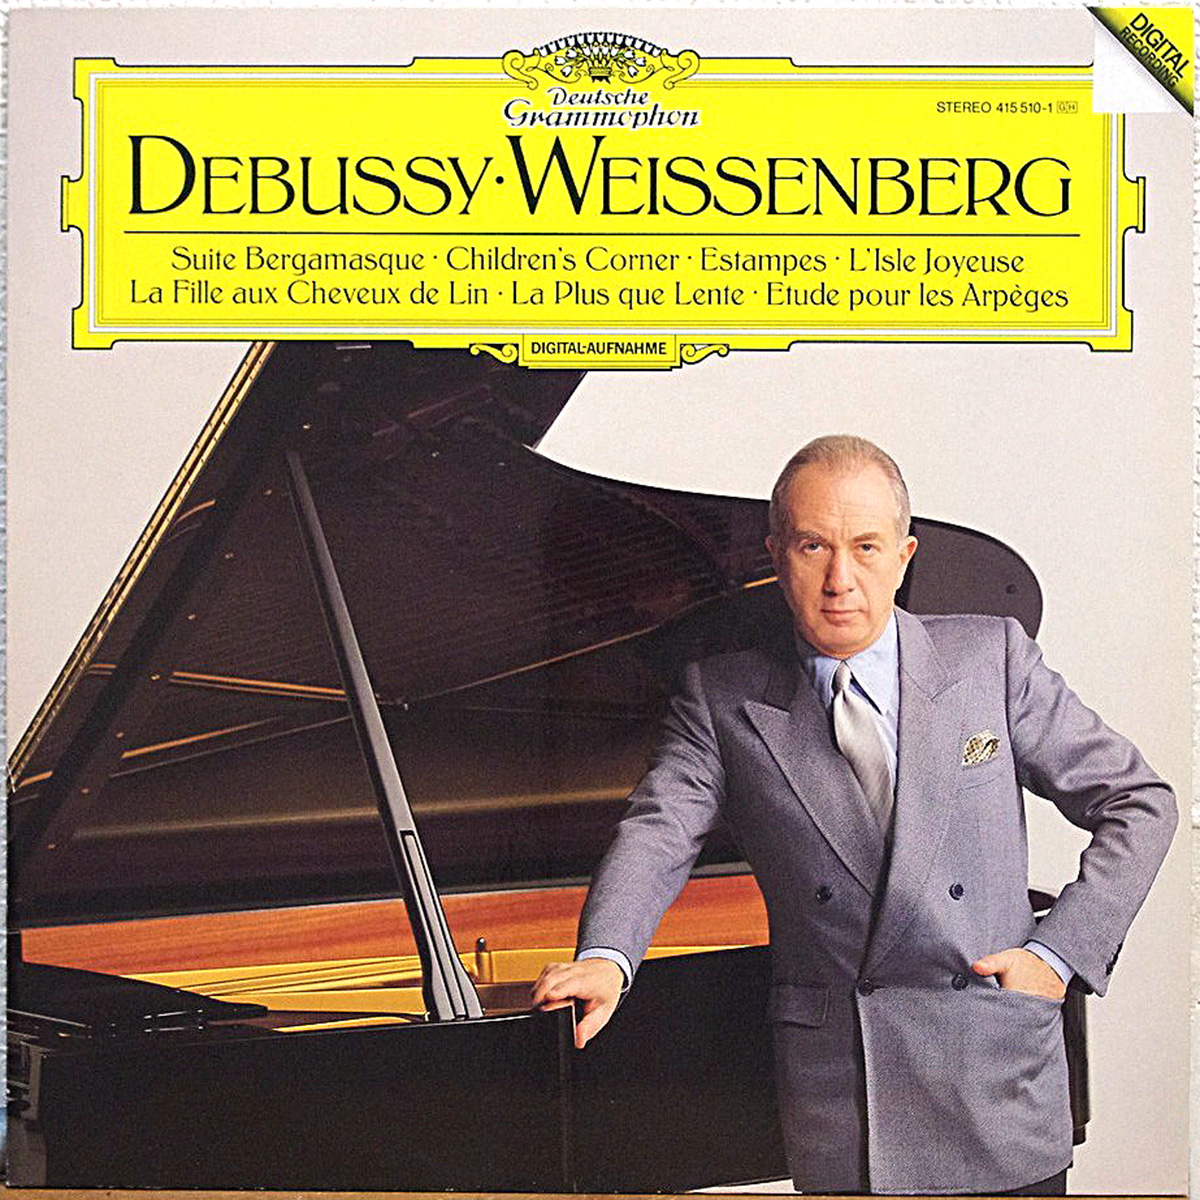 DGG 415 510 Debussy Suite Bergamasque Estampes Weissenberg DGG Digital Aufnahme